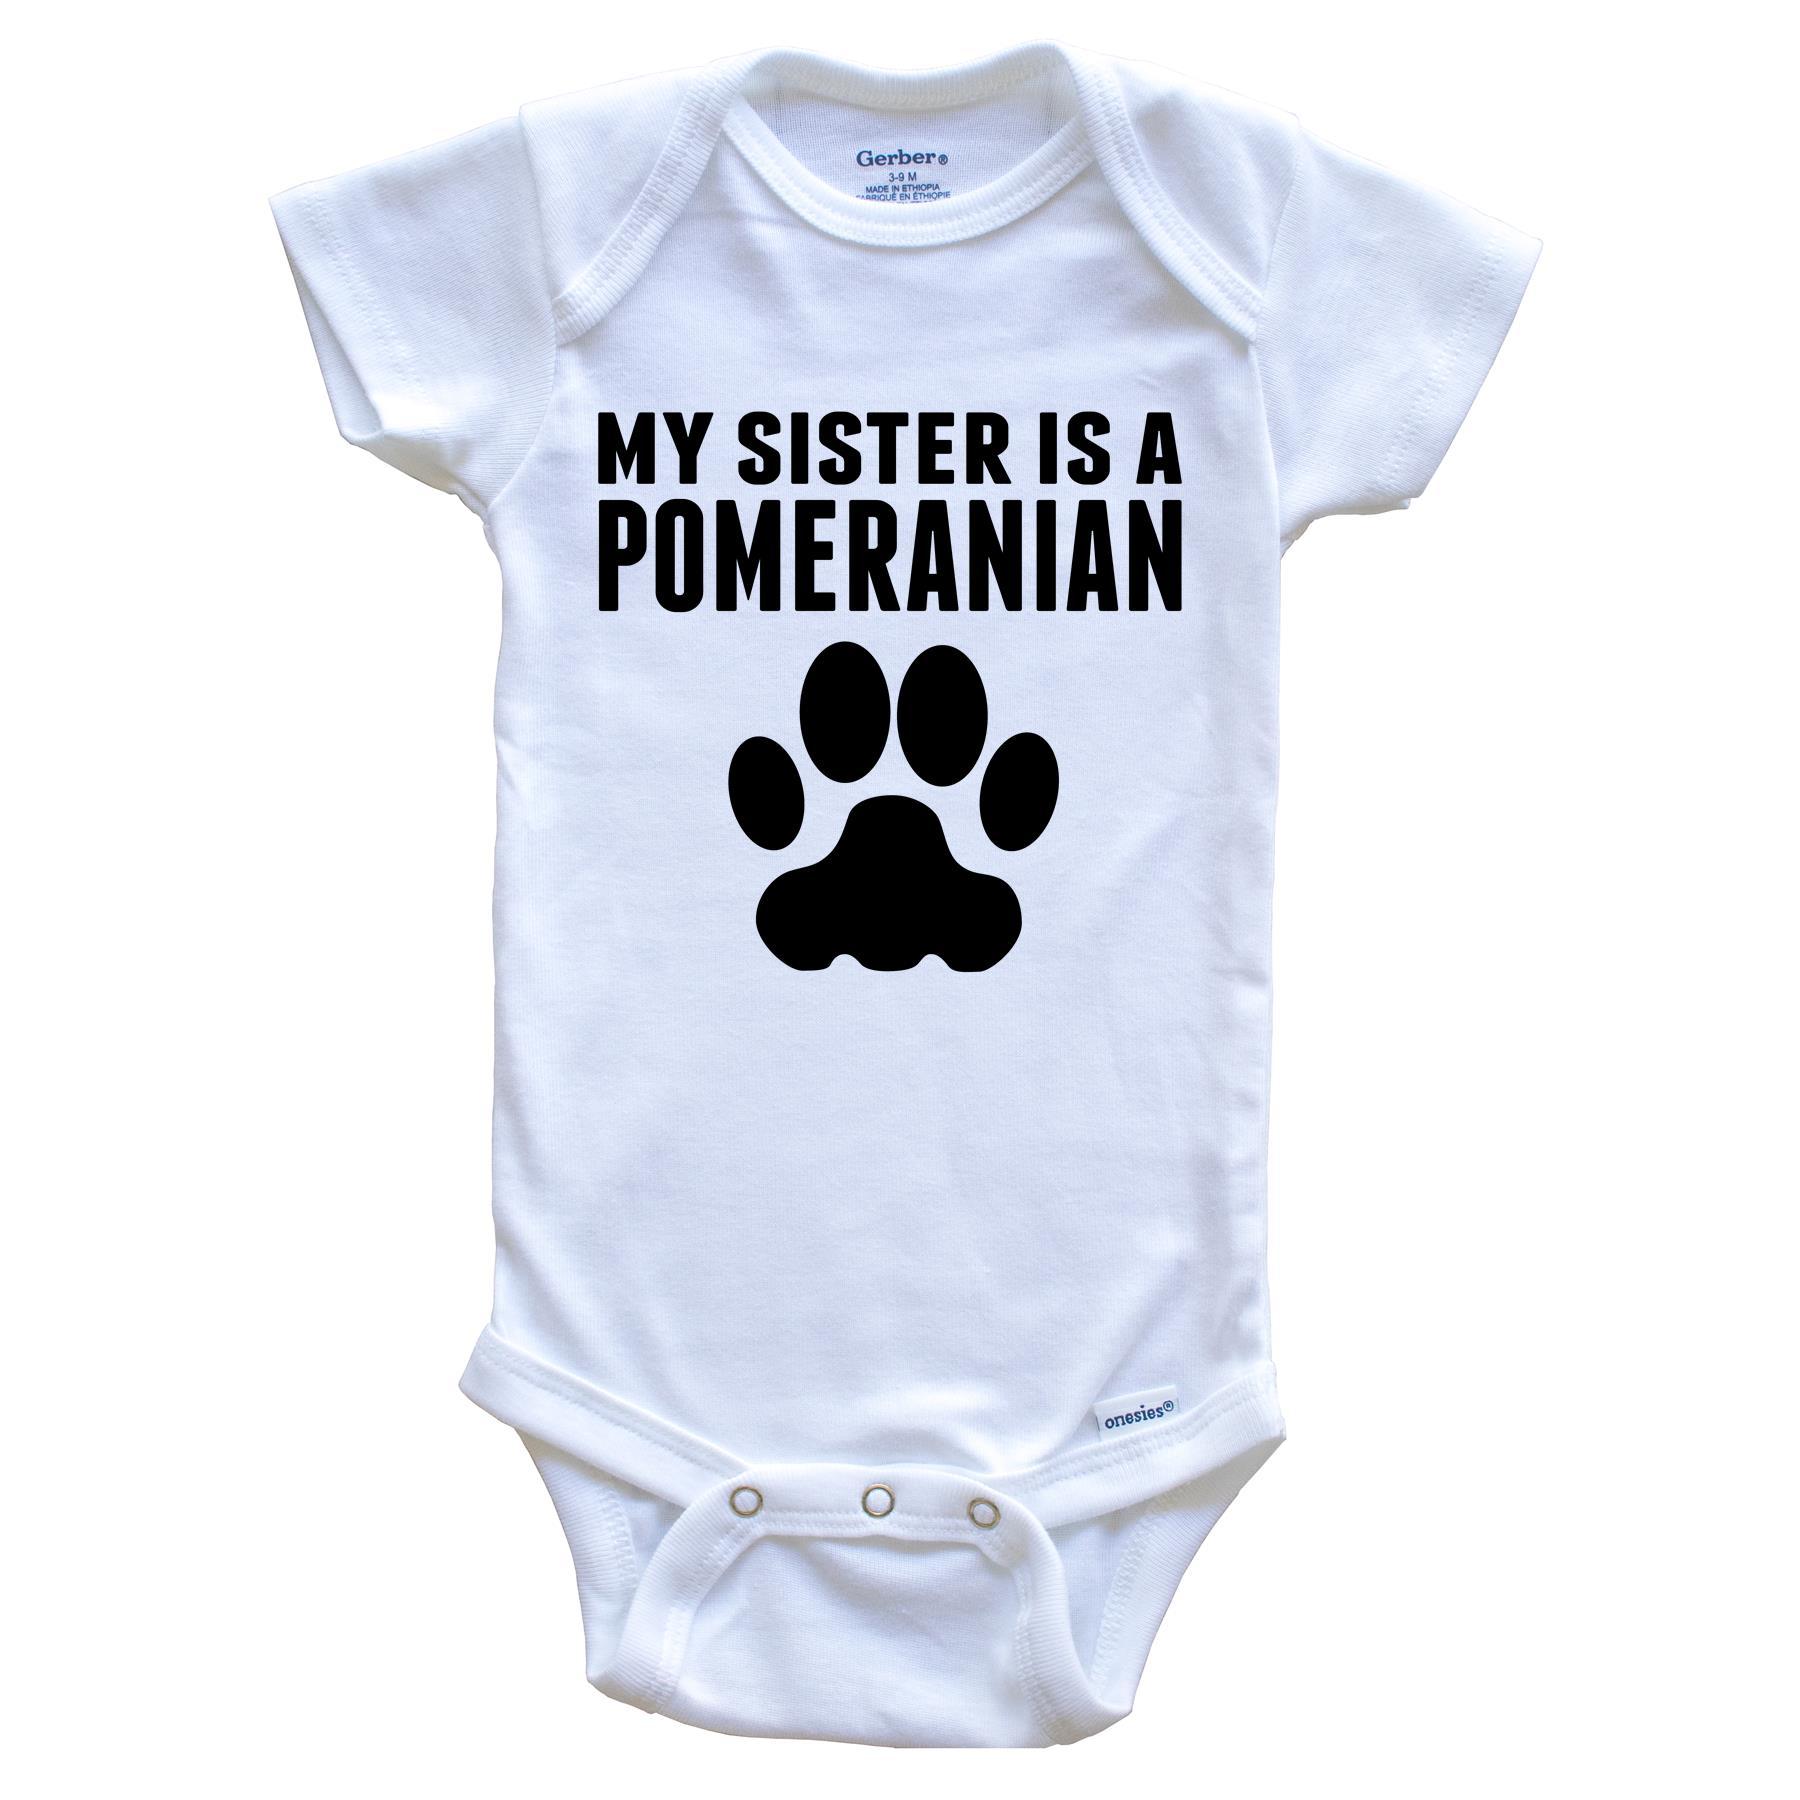 My Sister Is A Pomeranian Baby Onesie